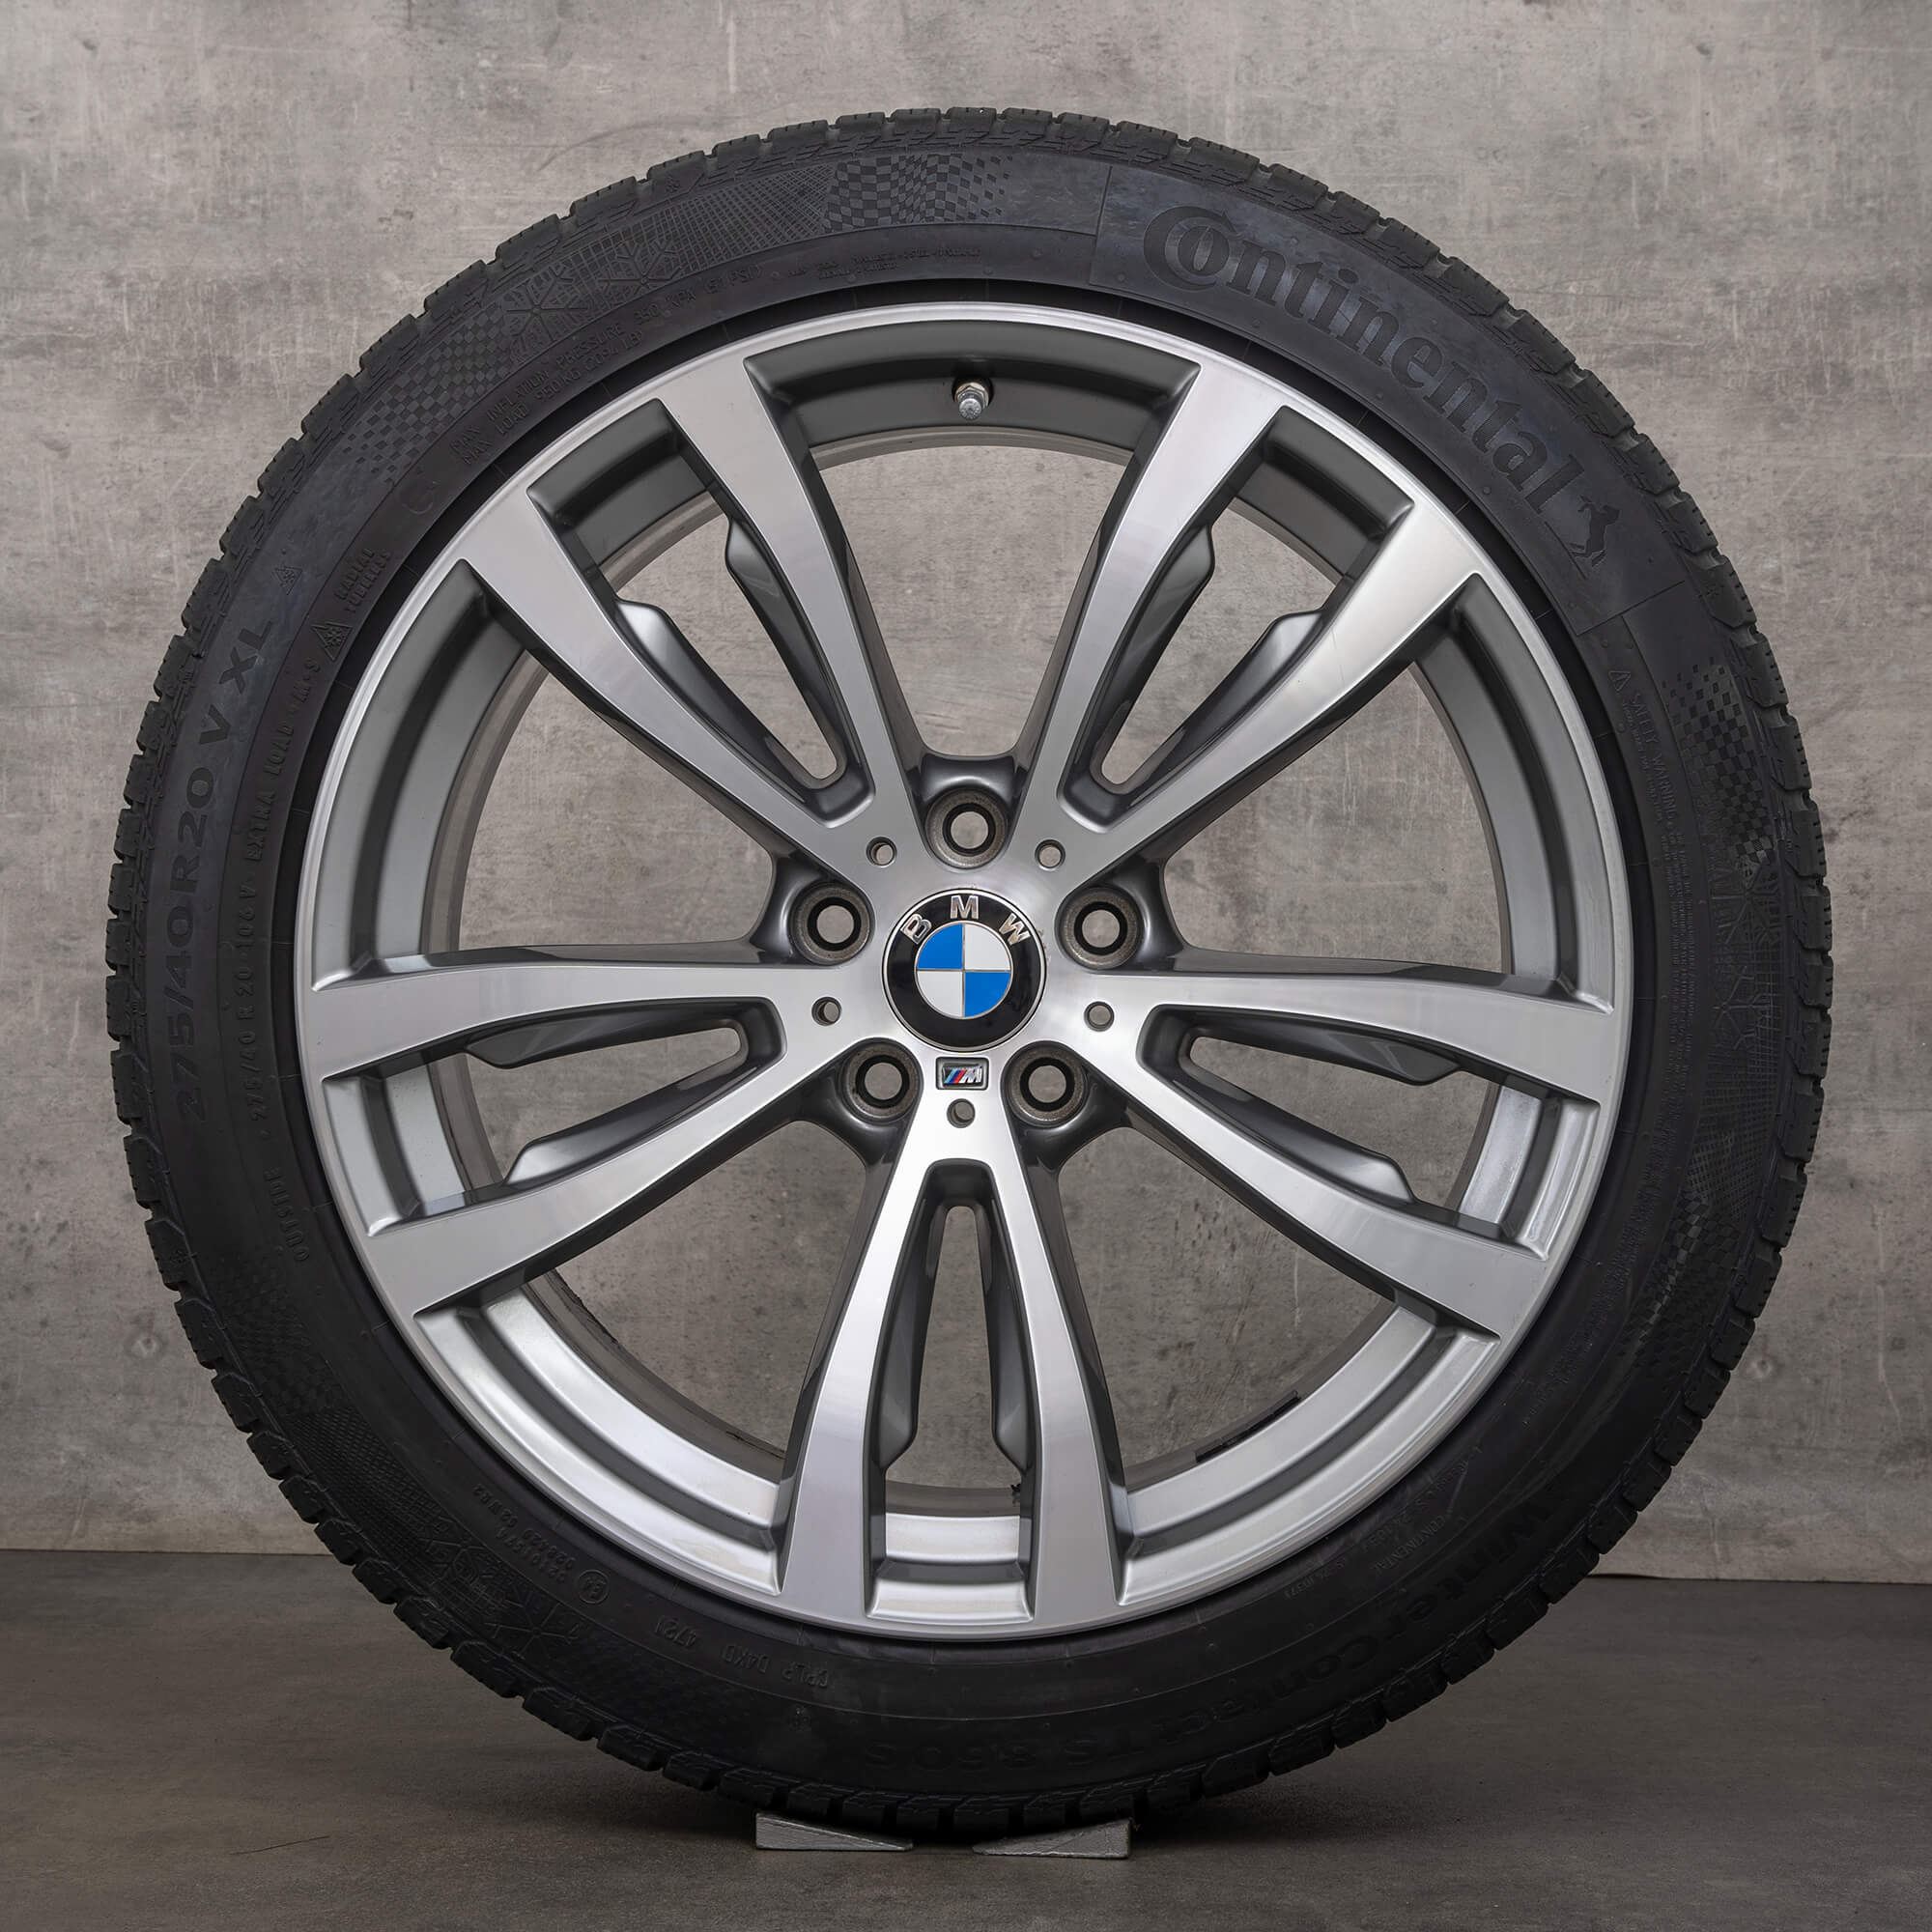 BMW X5 E70 F15 X6 F16 winter wheels 20 inch rims styling 469 M tires